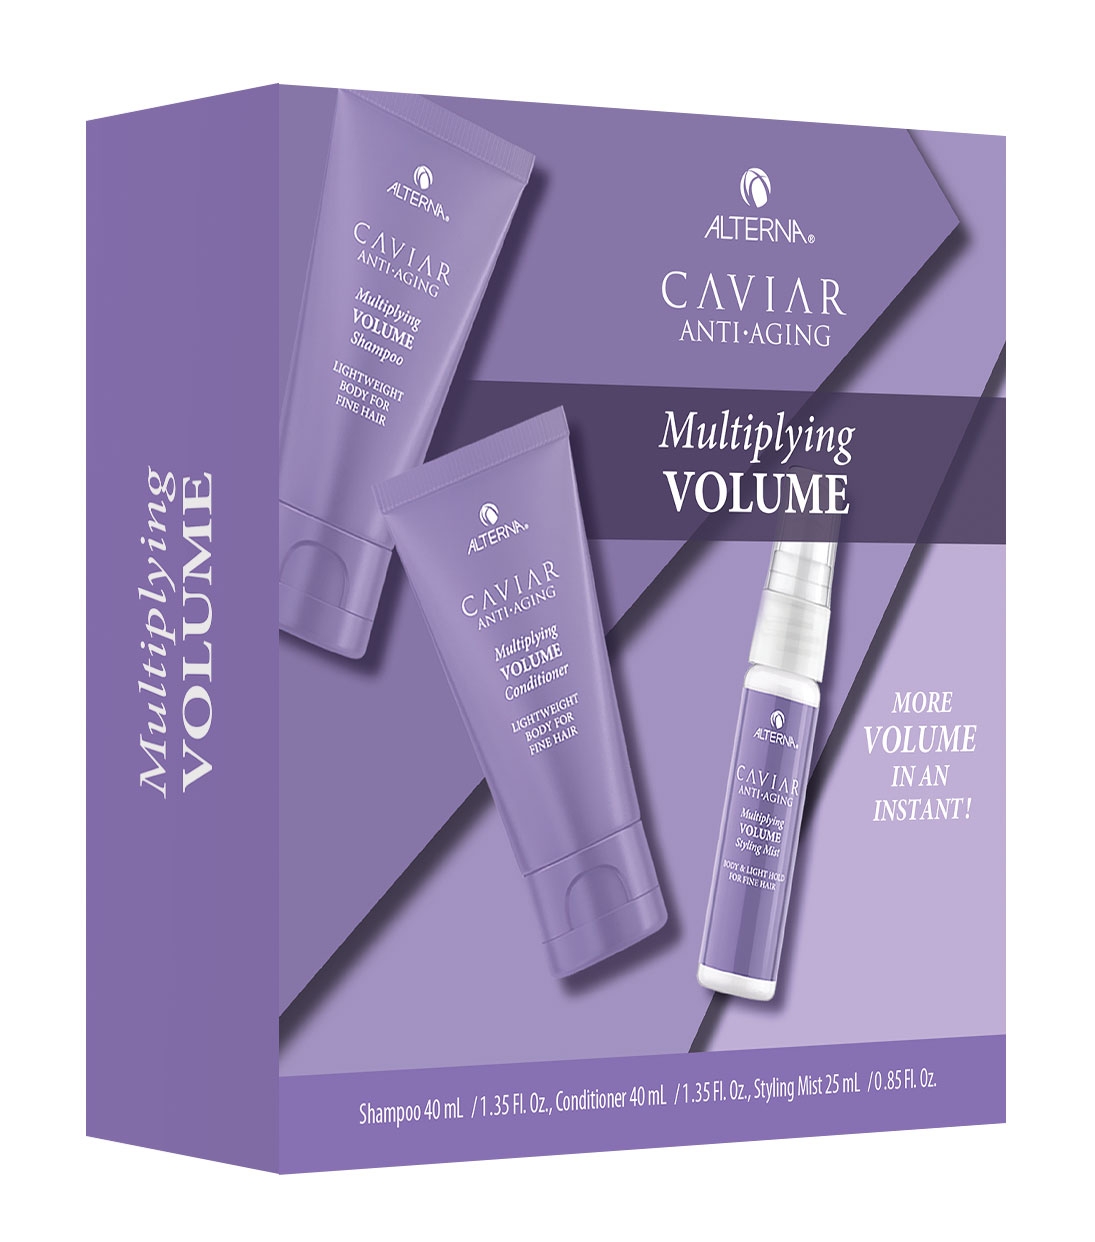 Alterna Caviar Multiplying Volume Trial Kit